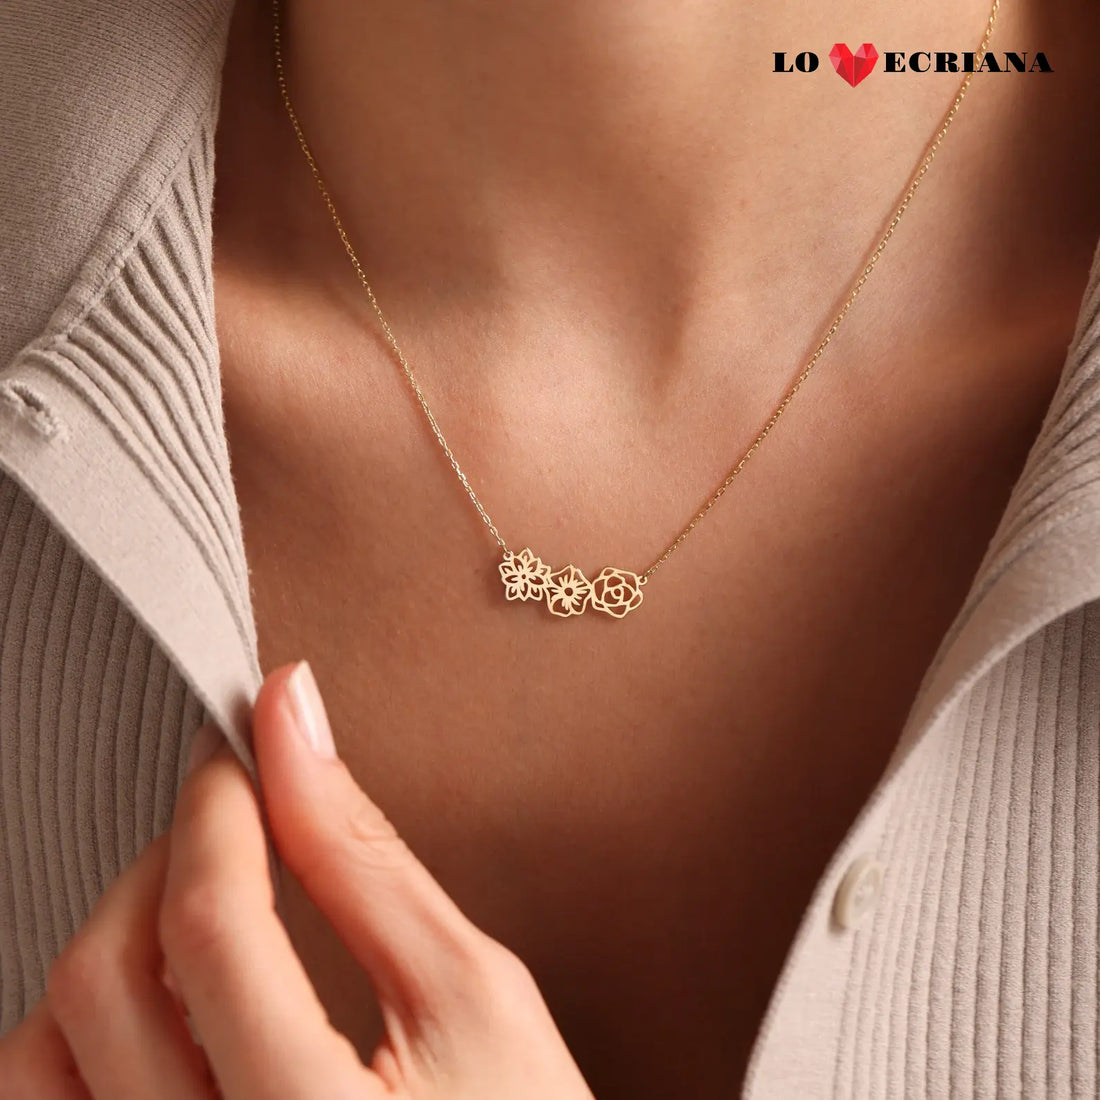 Lovecriana Combined Birth Flower Necklace • Birth Flower Jewelry